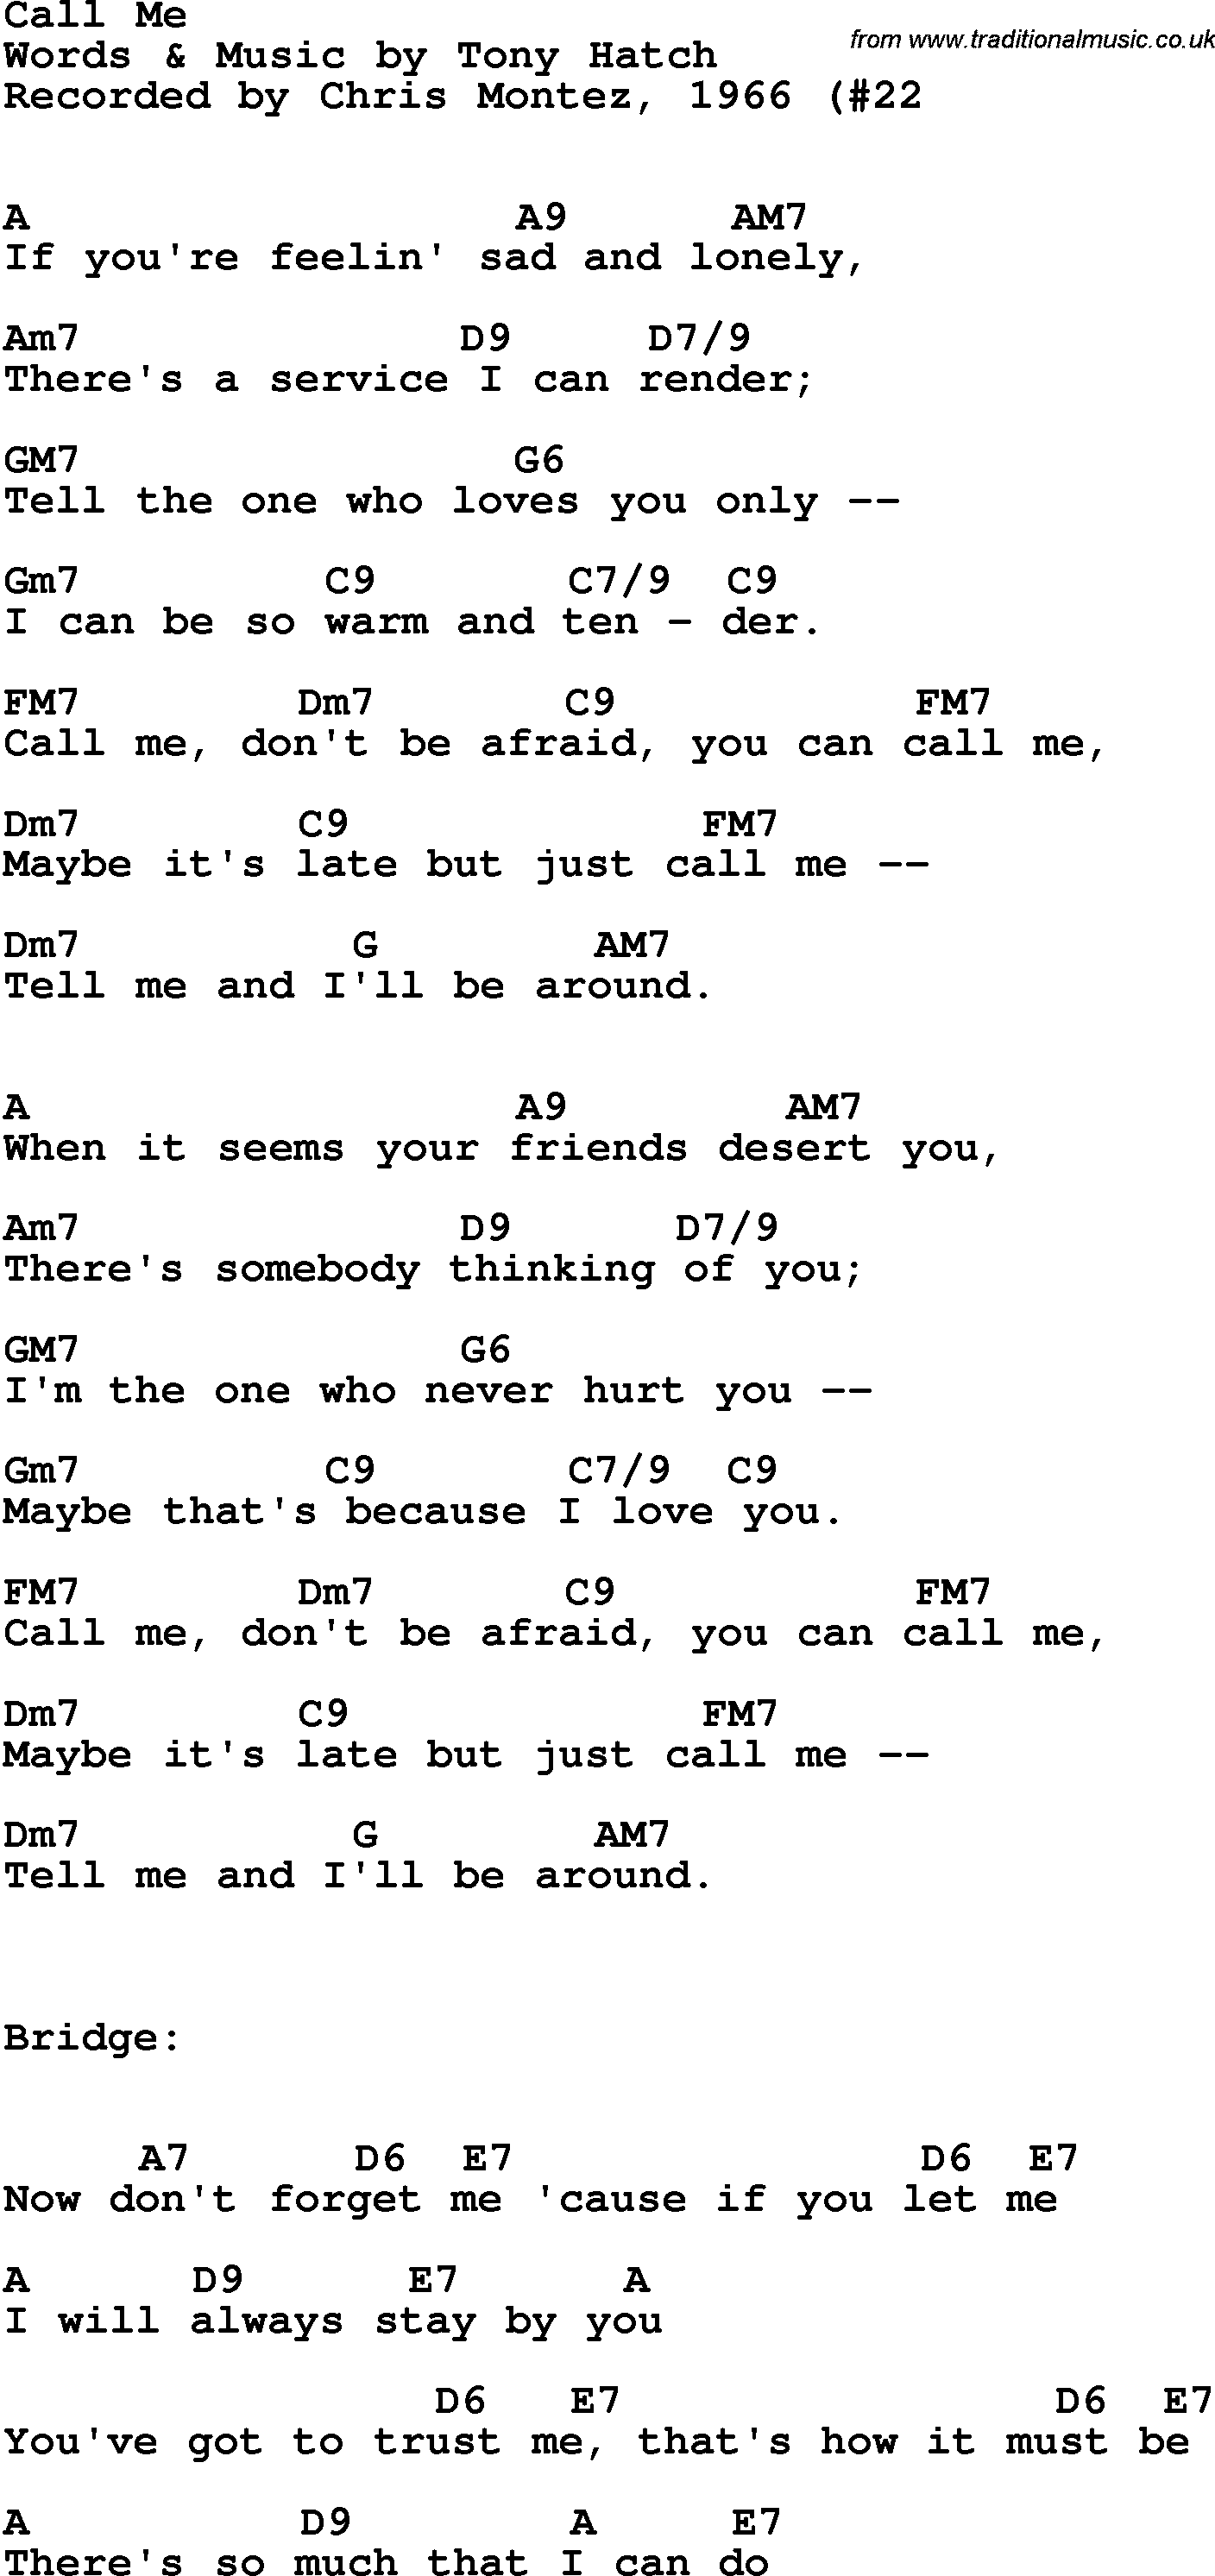 Song Lyrics with guitar chords for Call Me - Chris Montez, 1966